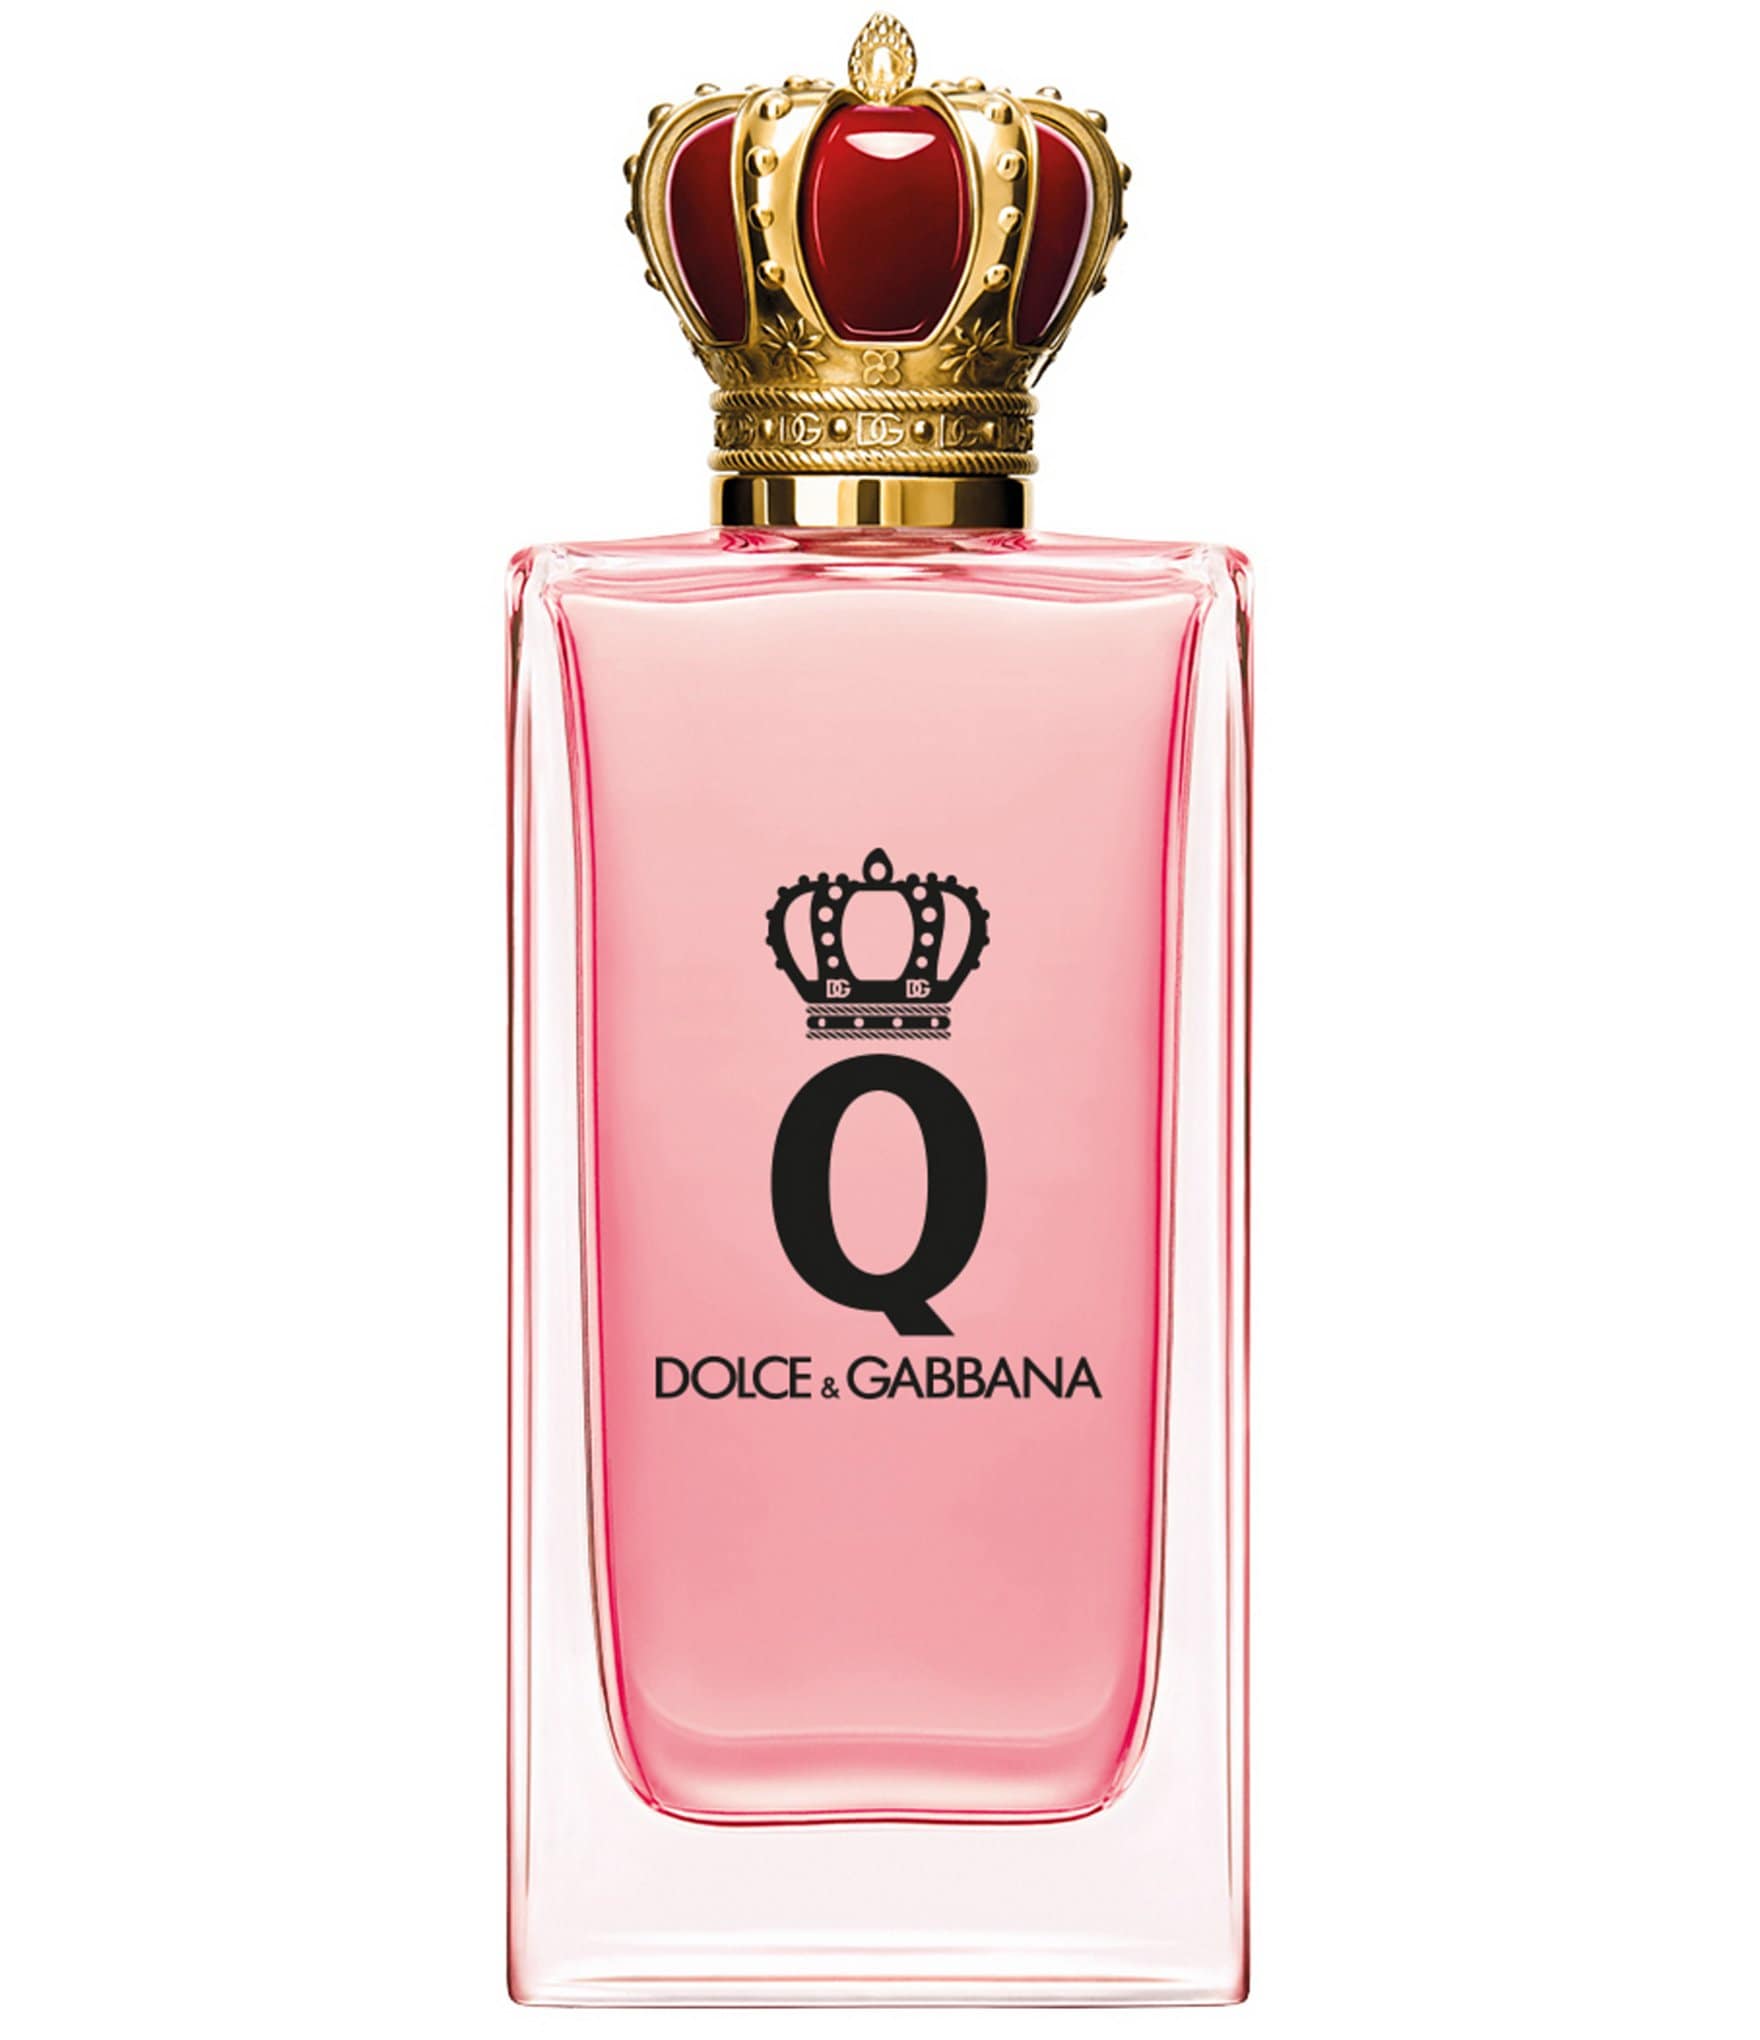 Dolce & Gabbana Q Eau de Parfum Spray | Dillard\'s